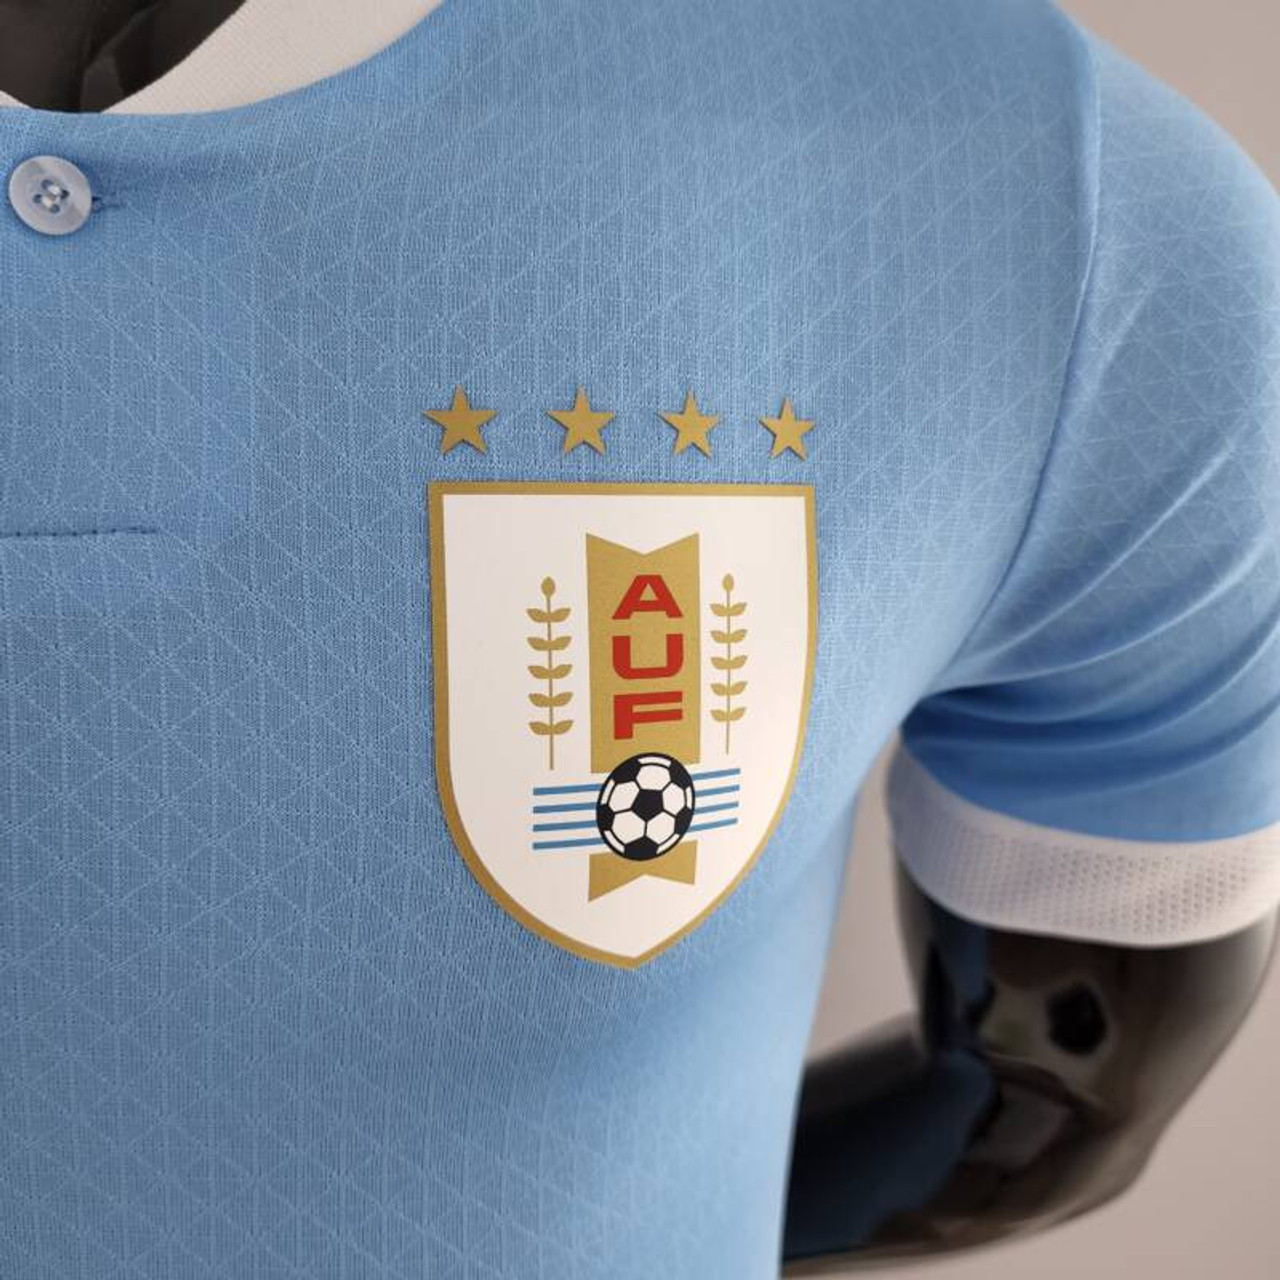 Torta Camiseta Selección Uruguaya/ Uruguay Socker T-Shirt